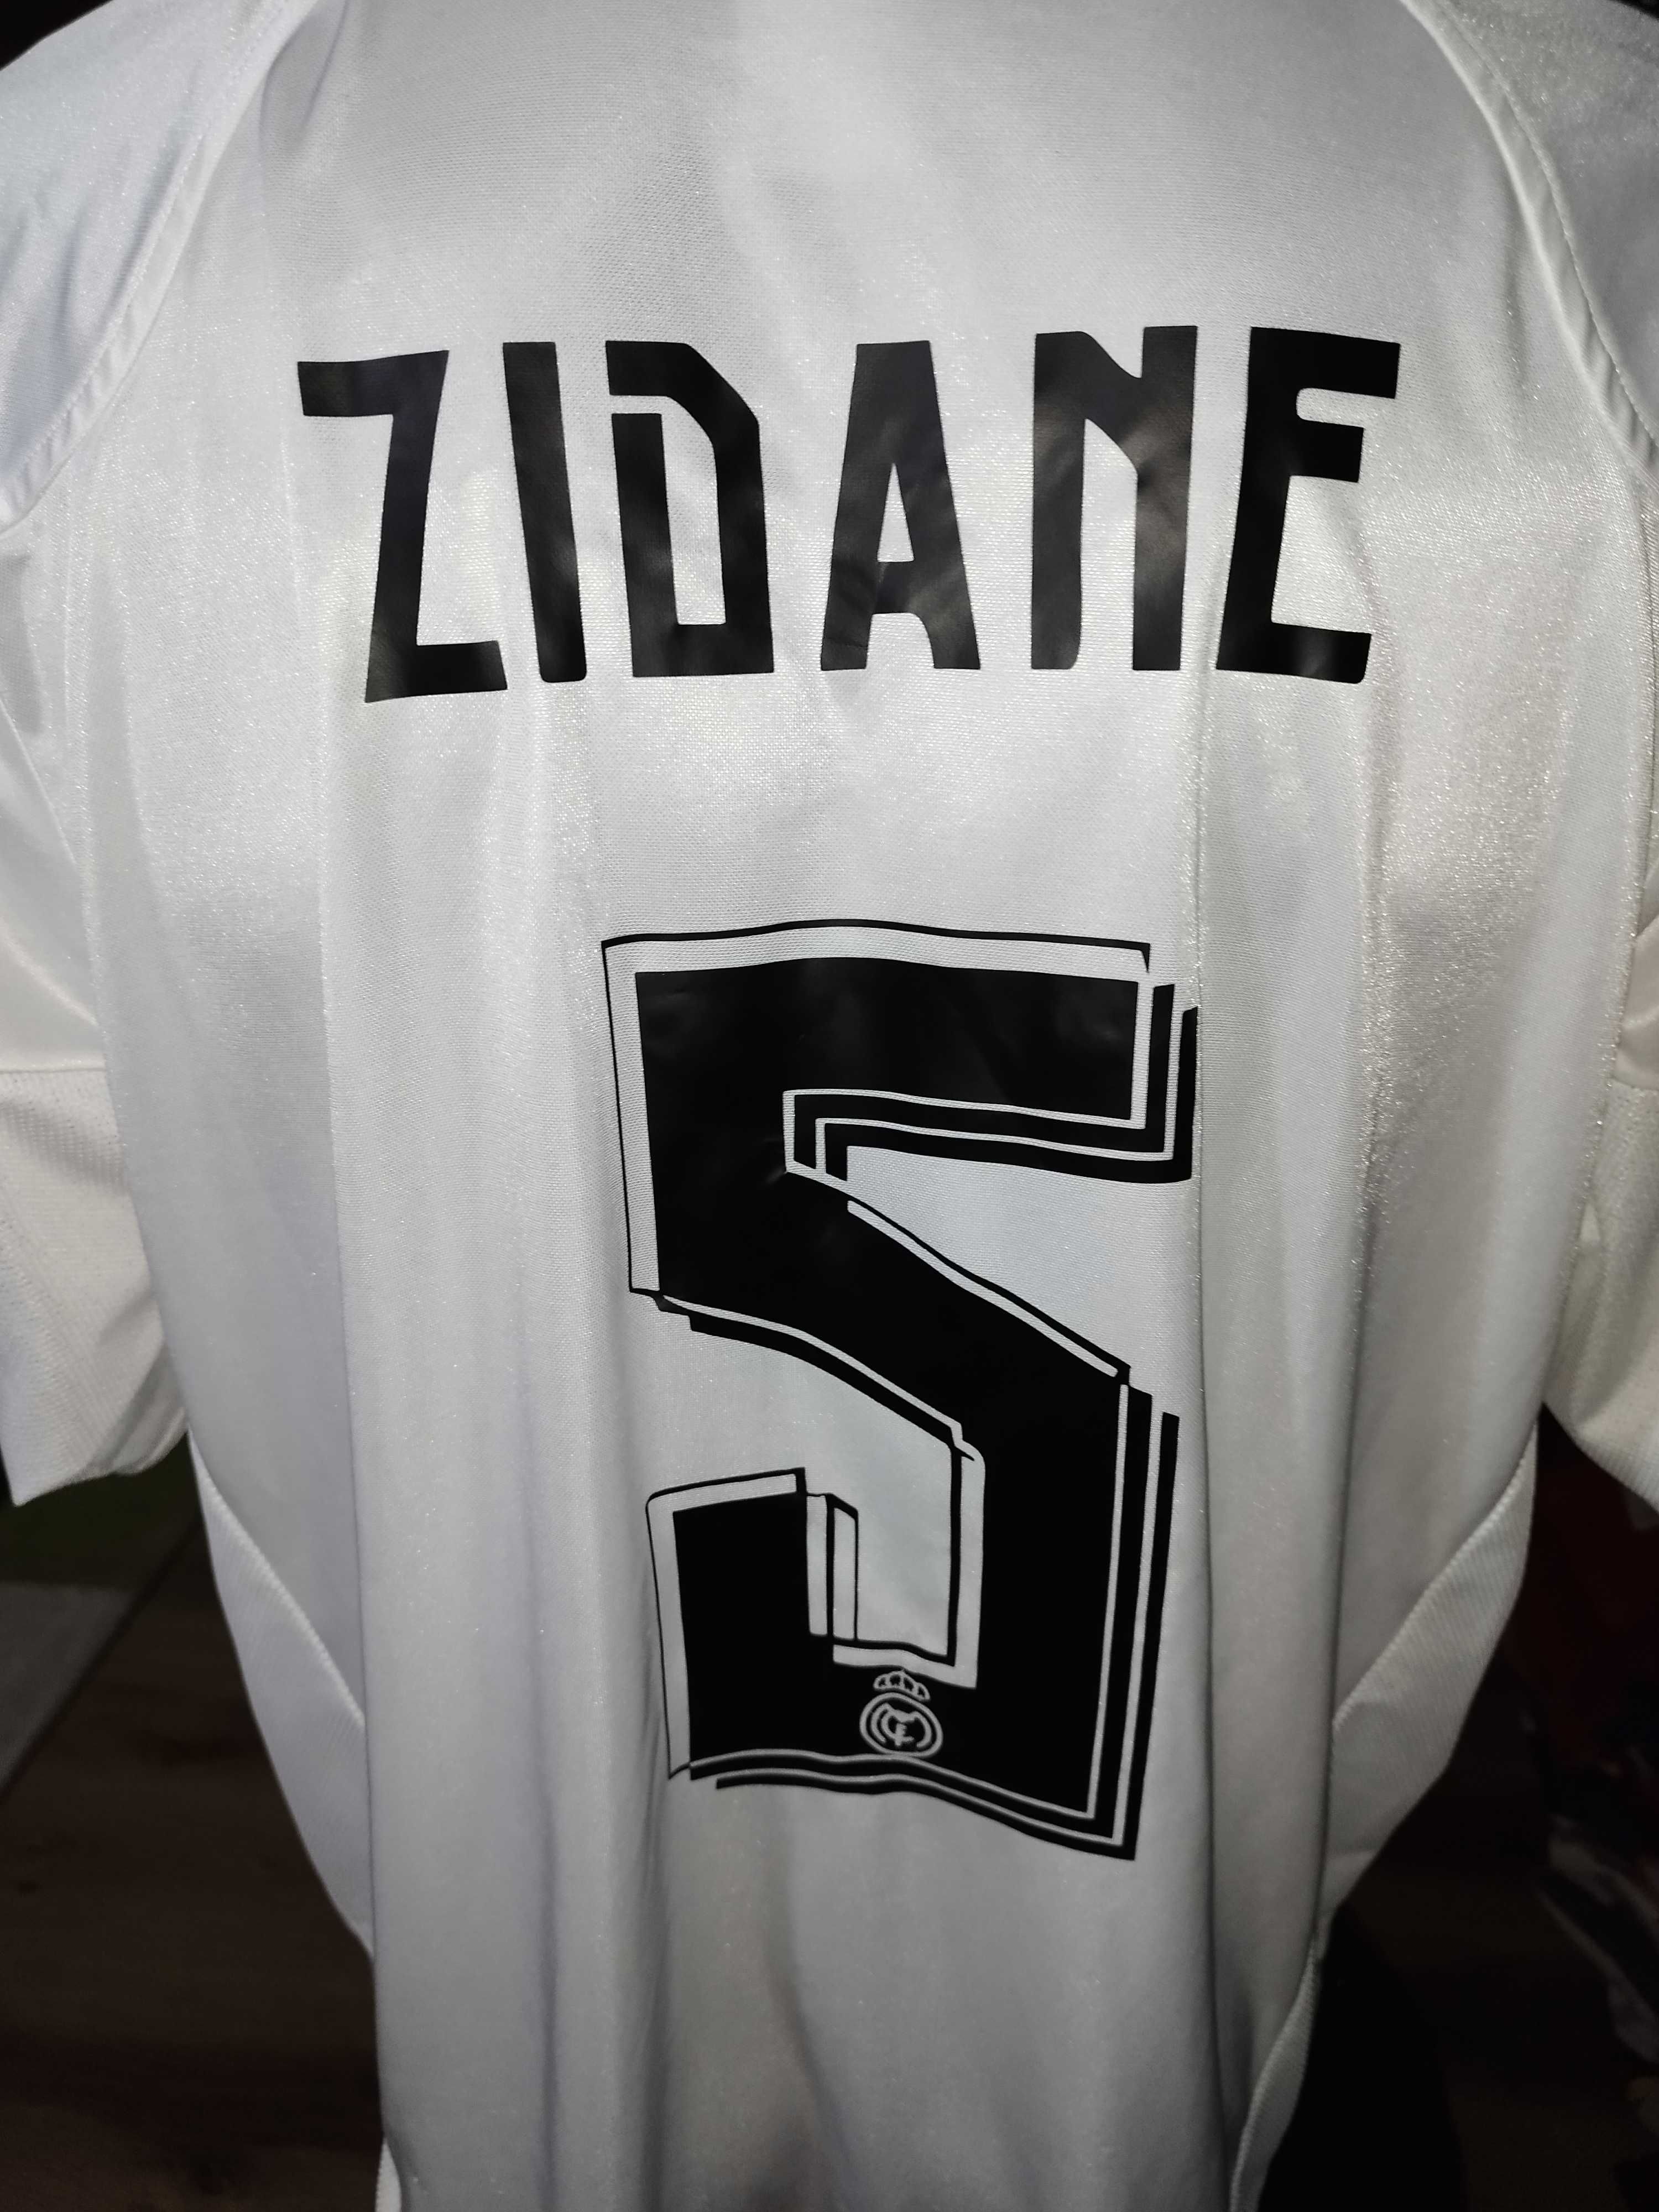 tricou real madrid zidane #5 adidas marimea 2XL de colectie